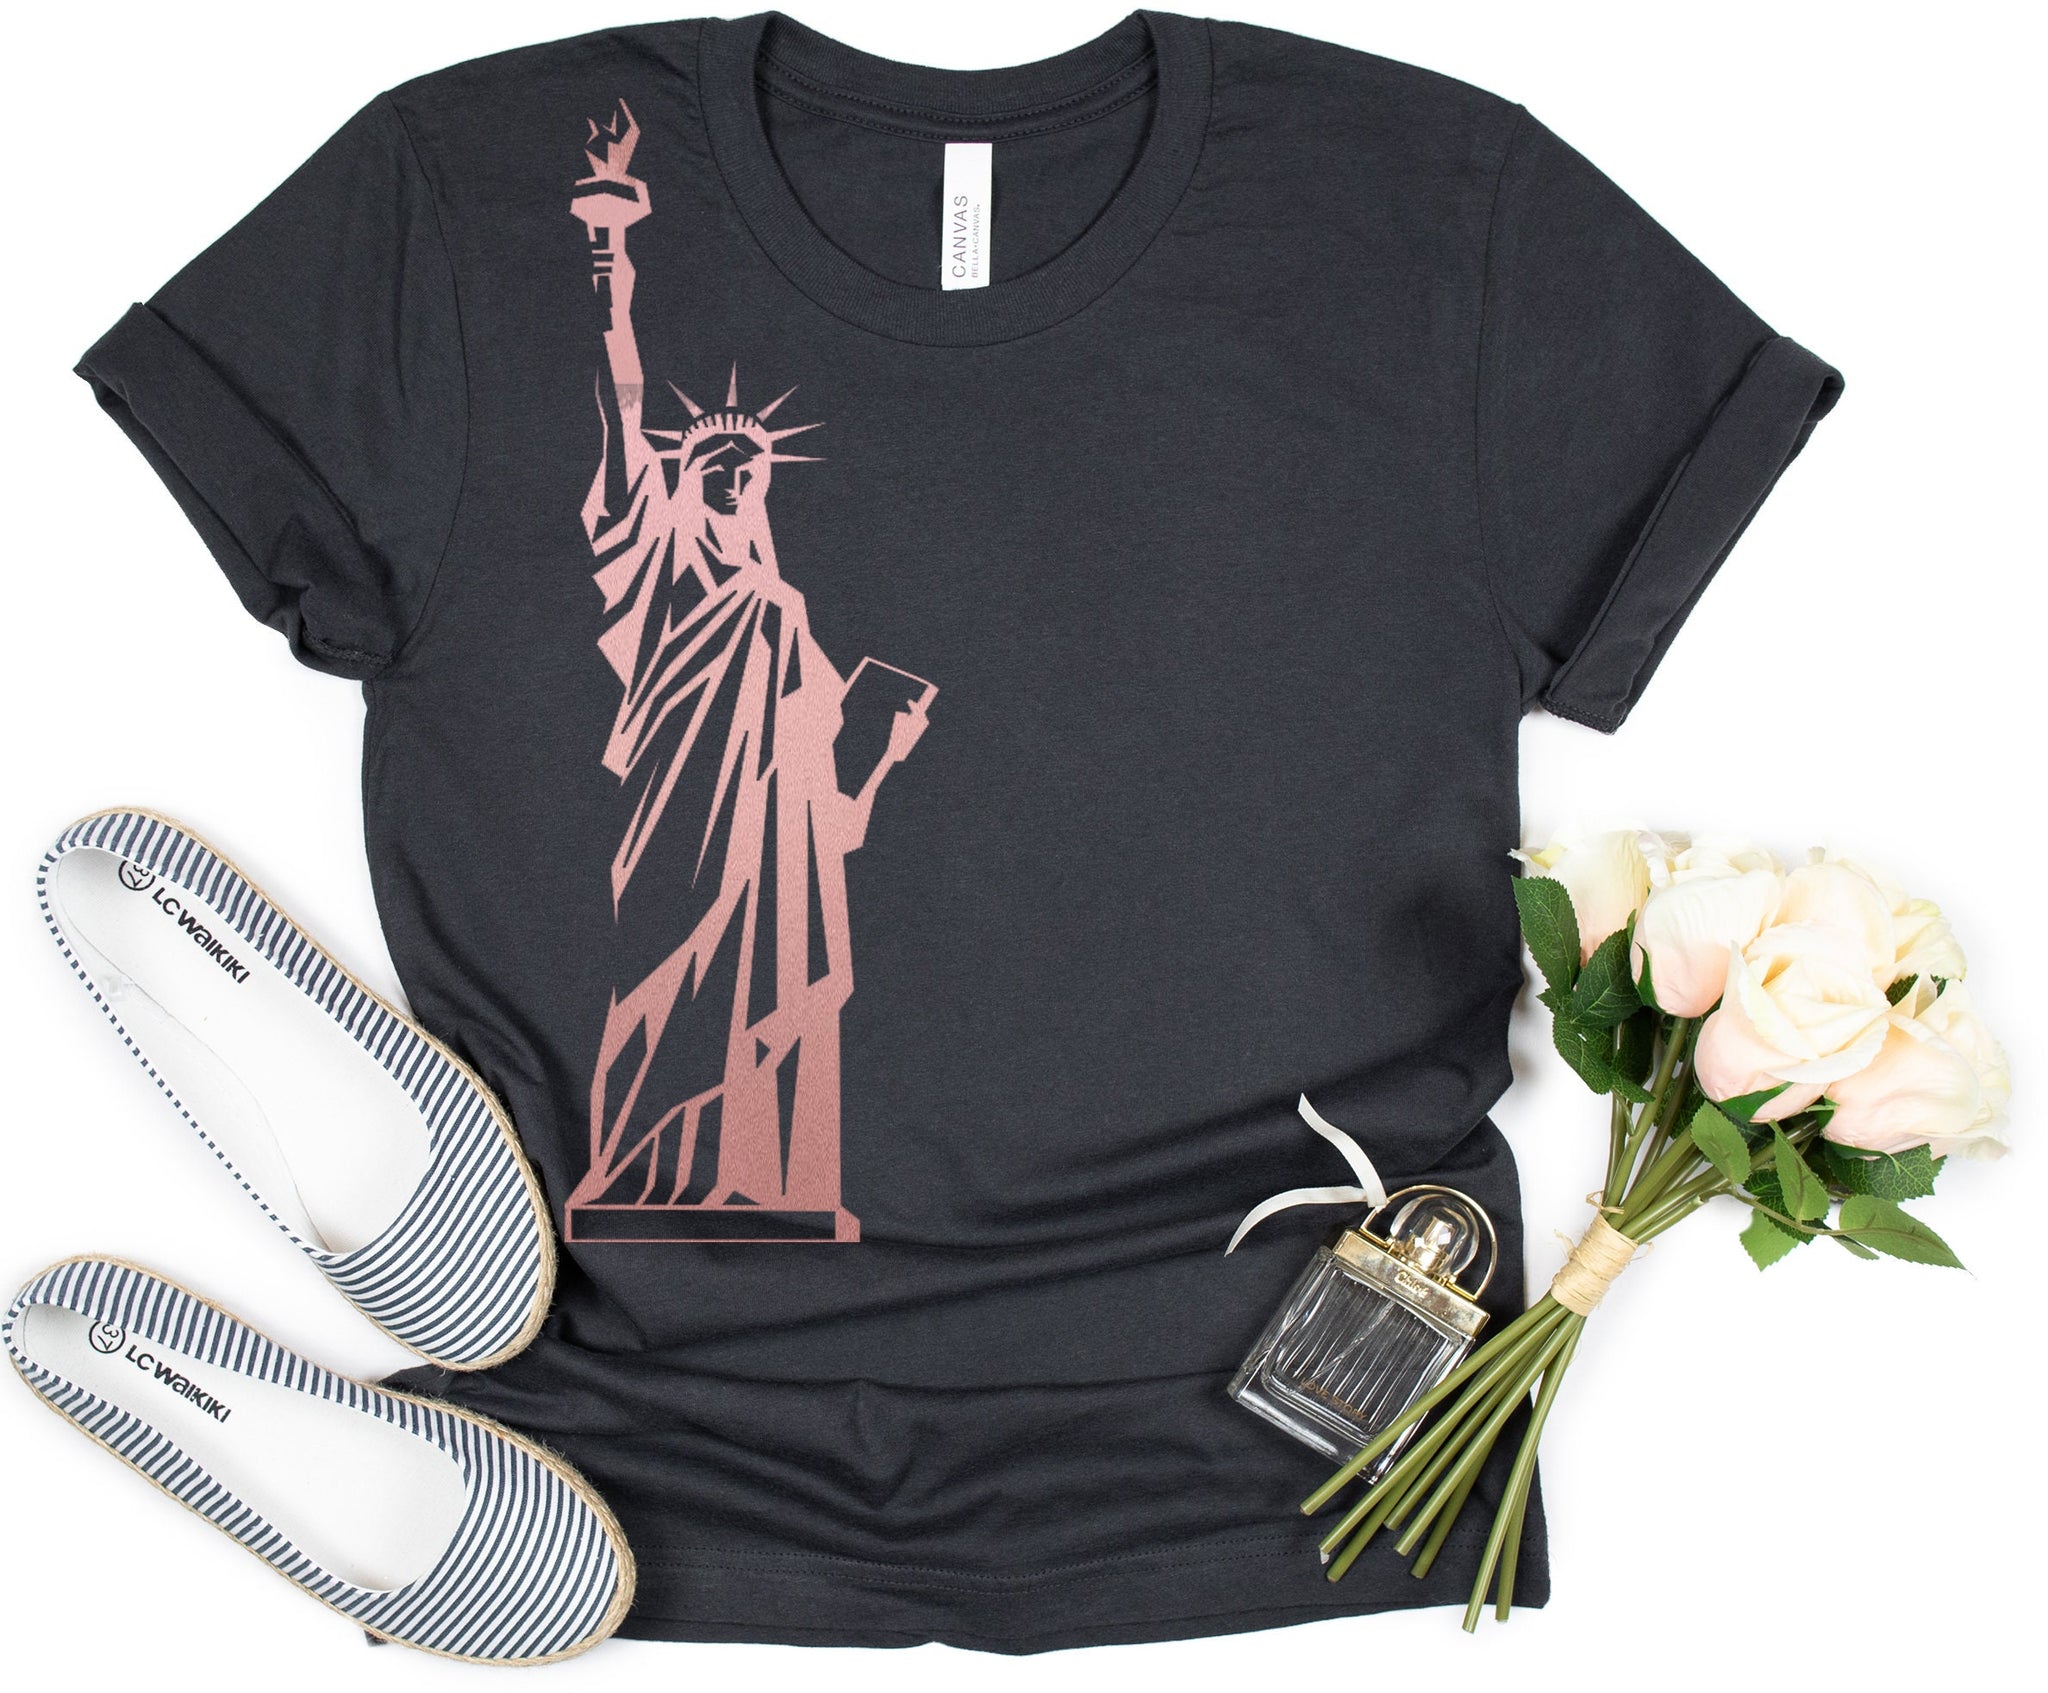 Liberty T-shirt,Statue of Liberty T-shirt,CHRISTMAS GIFT,USA Woman Tee,Youth Shirt,Trend Shirt,Gift for Christmas,Cool gift,Best Quality